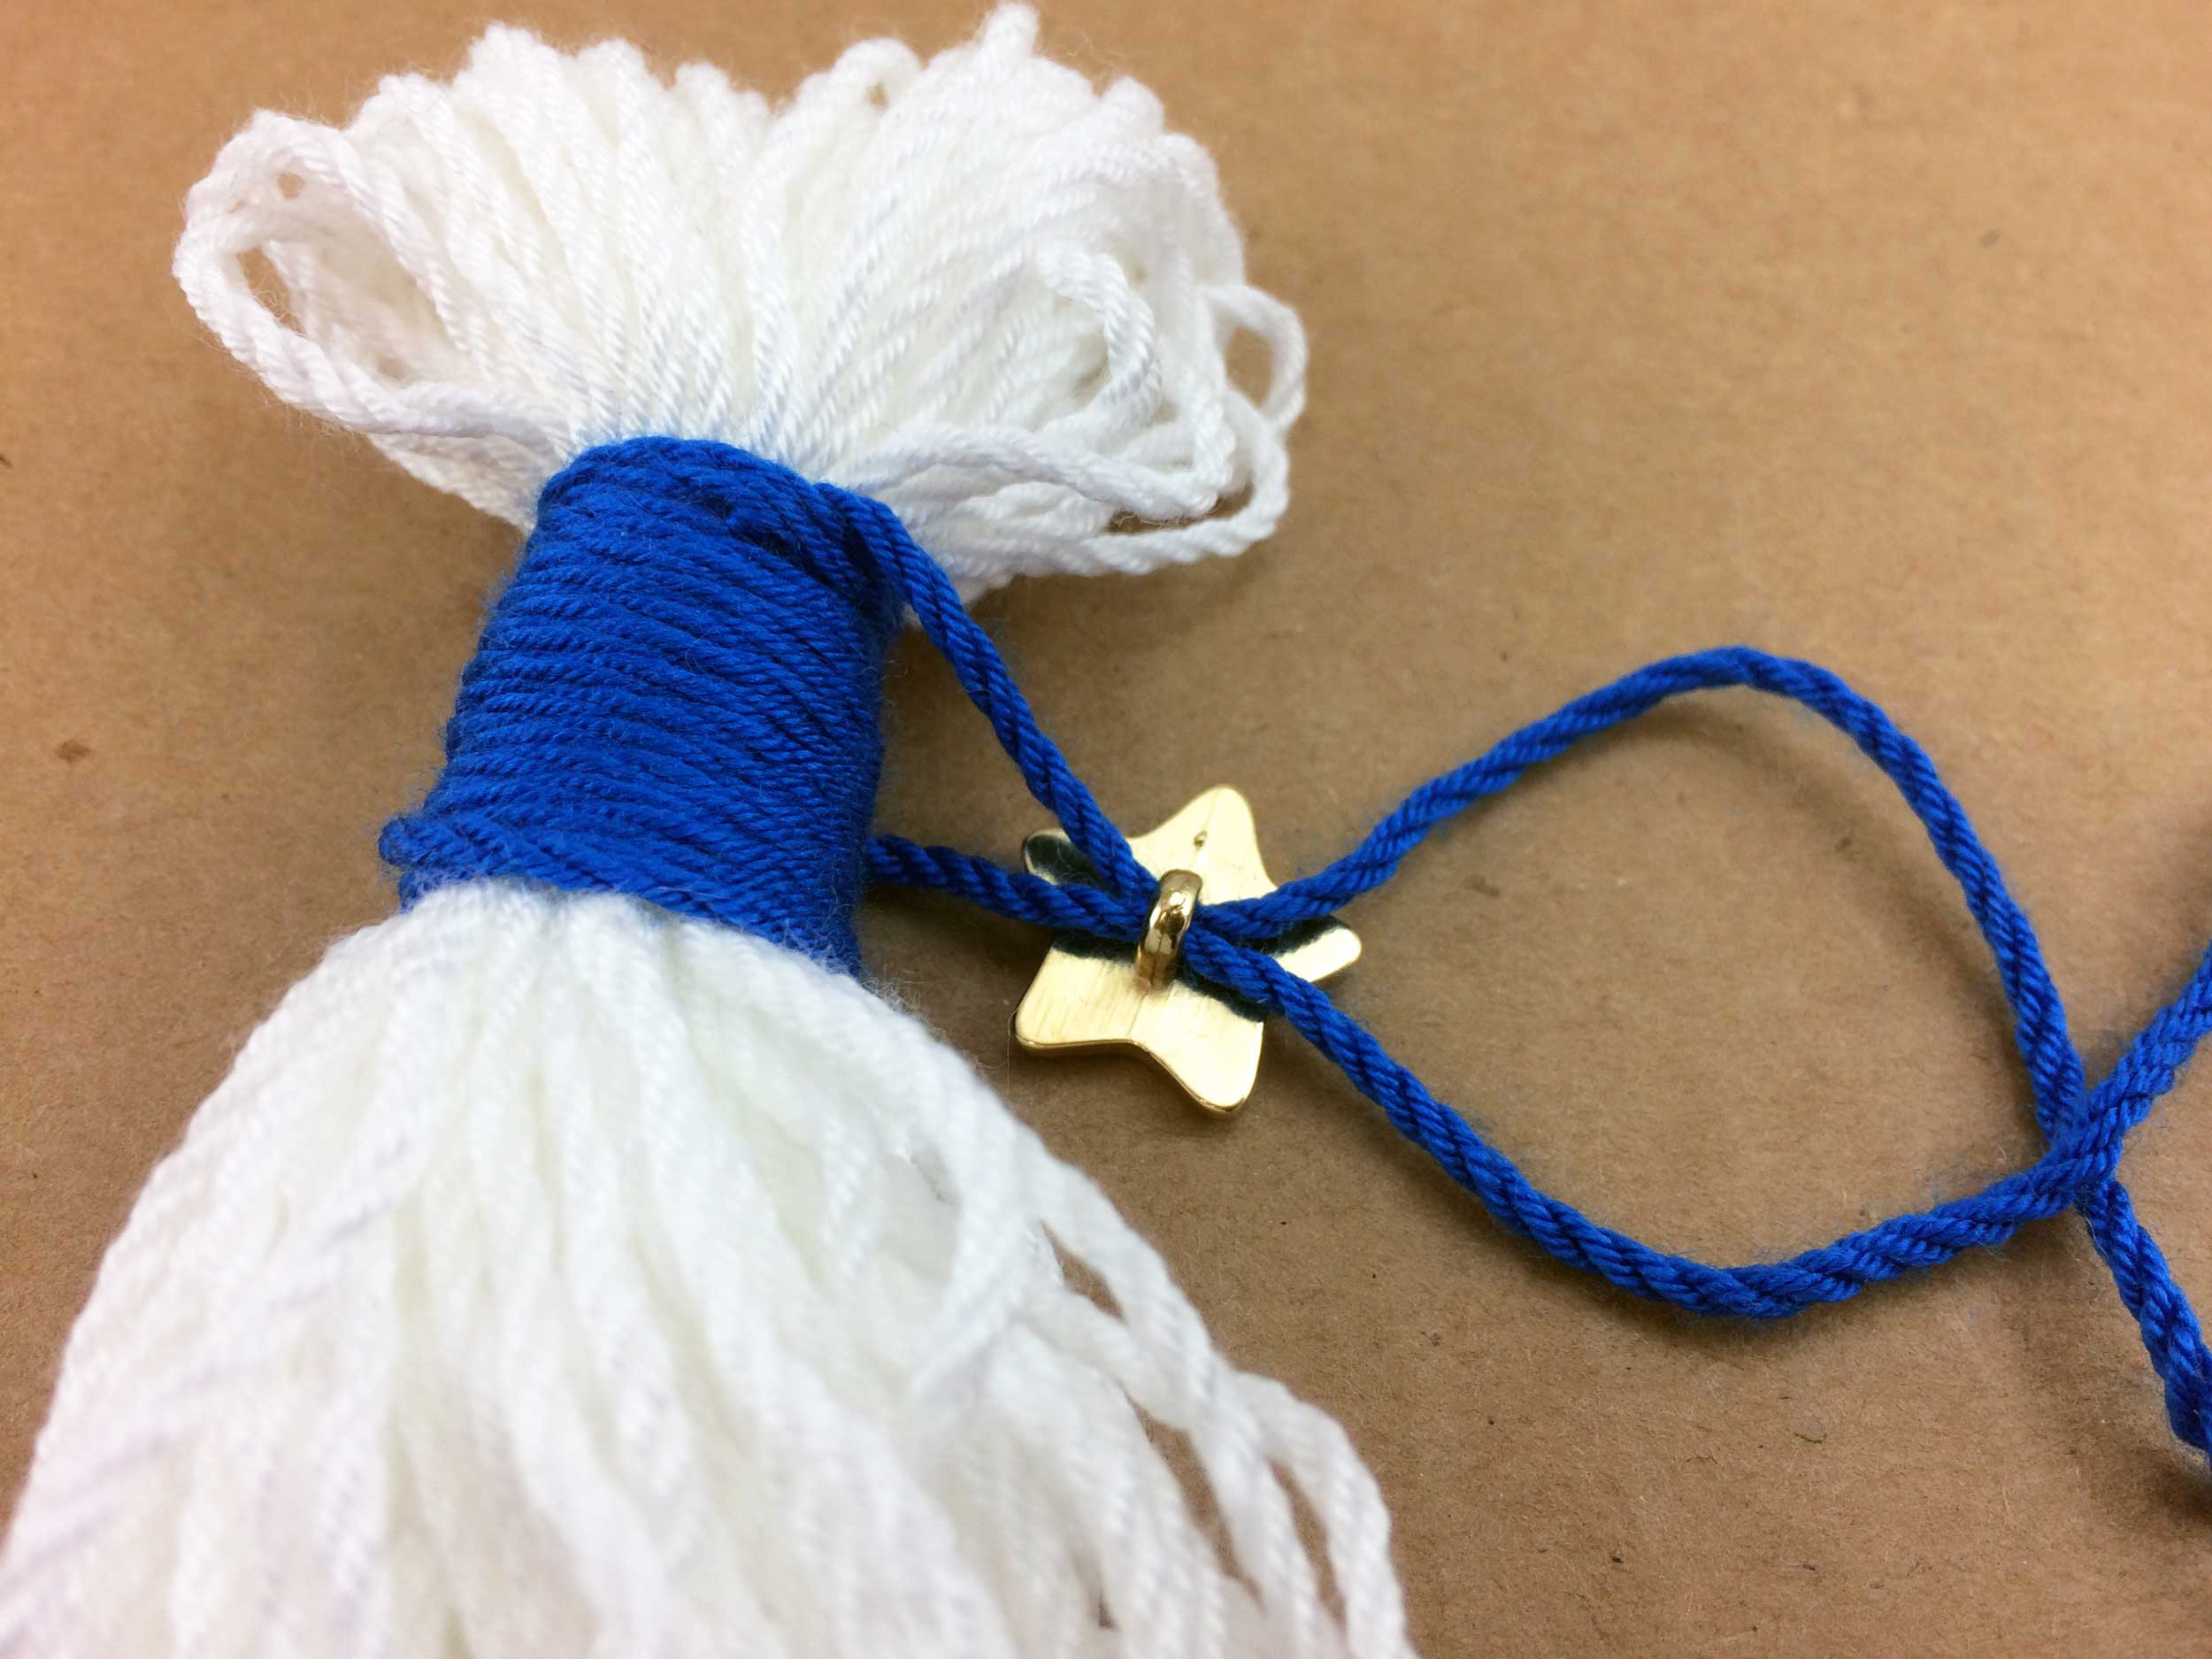 Thread Gold Star Button to contrasting color yarn | OrnamentShop.com